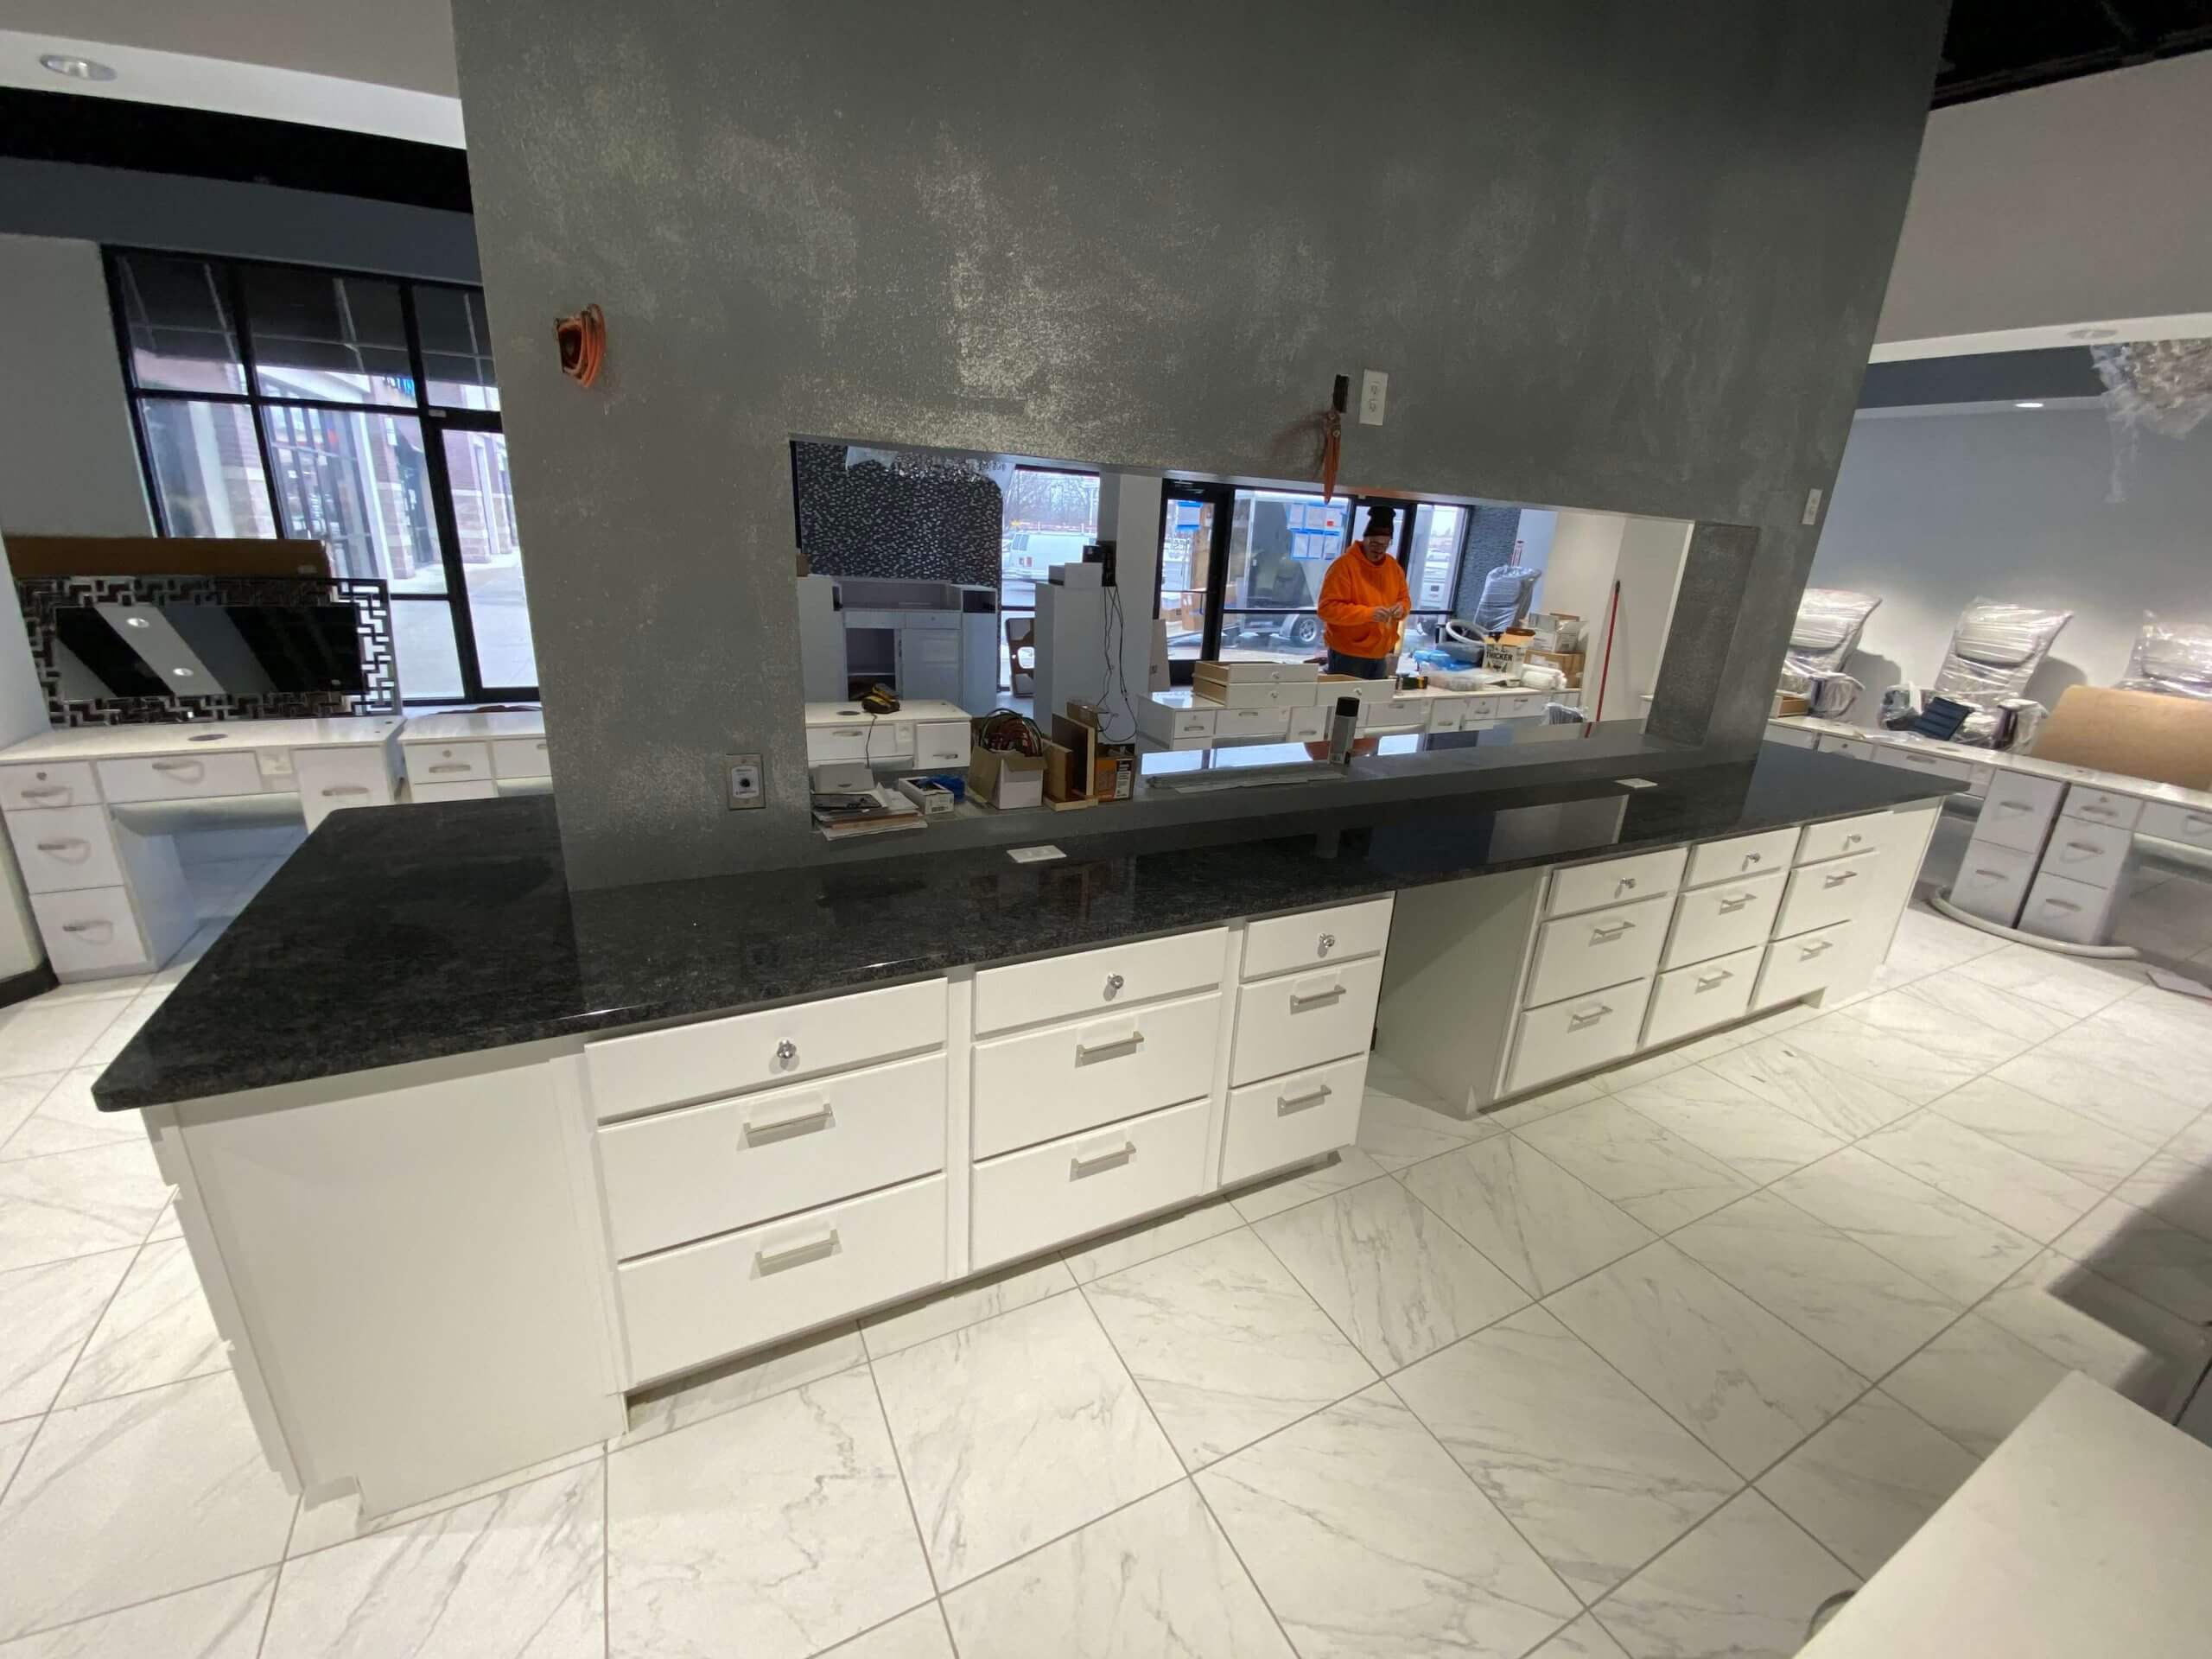 Prestige Tile & Stone kitchen Countertop